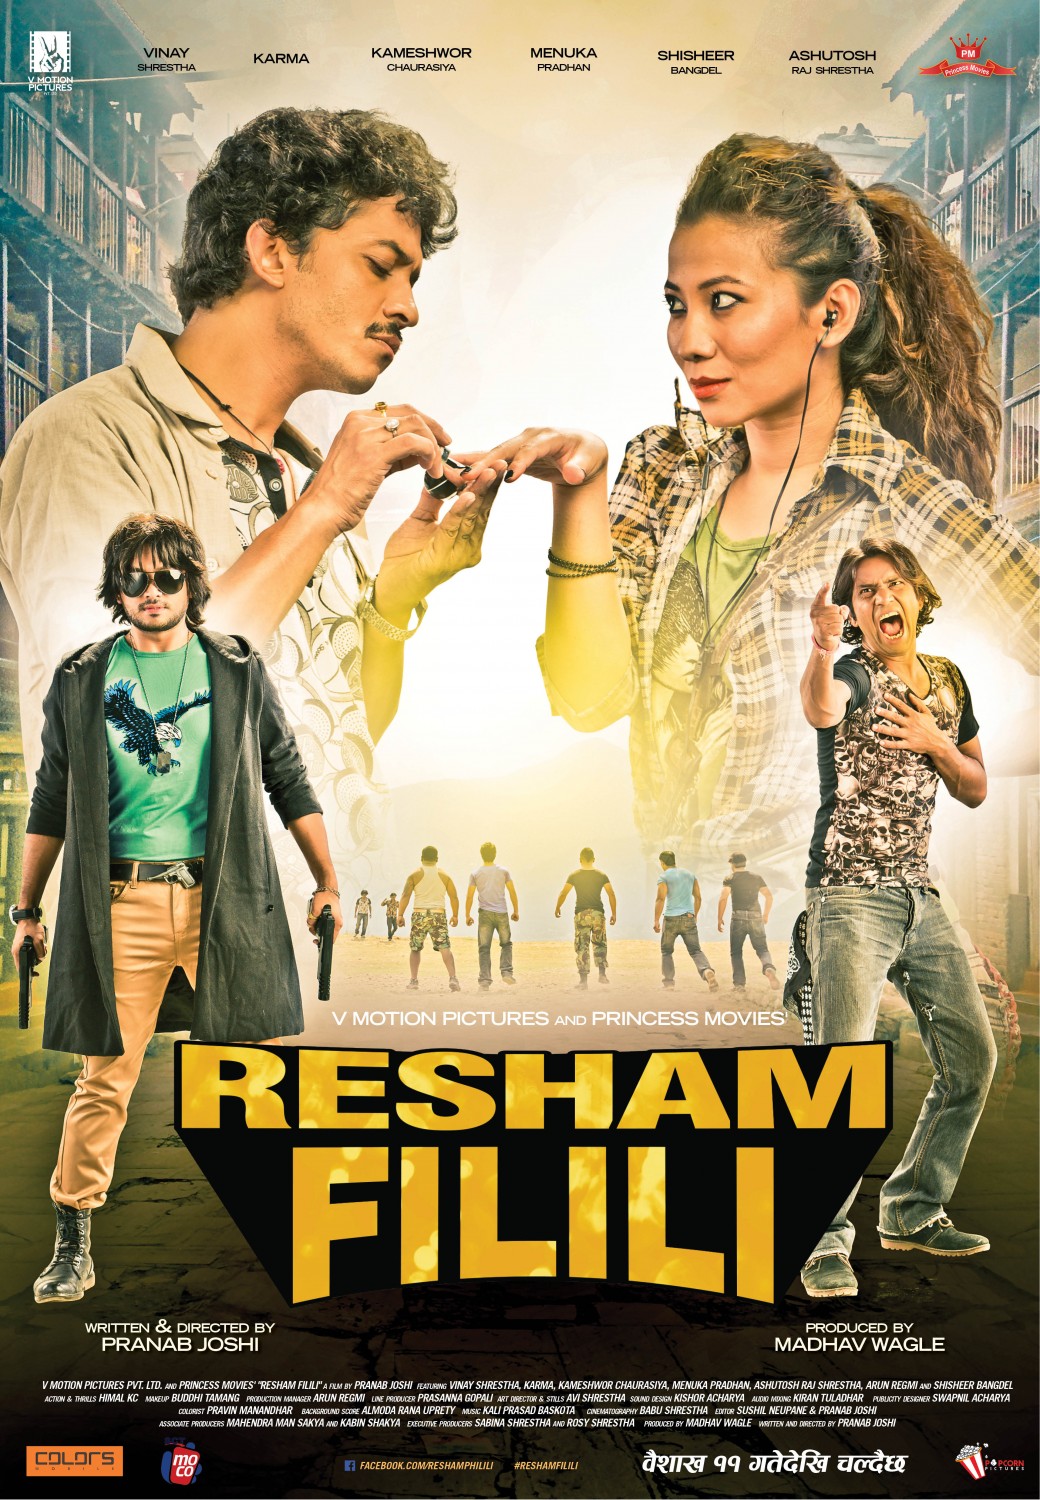 Extra Large Movie Poster Image for Resham Filili (#5 of 11)